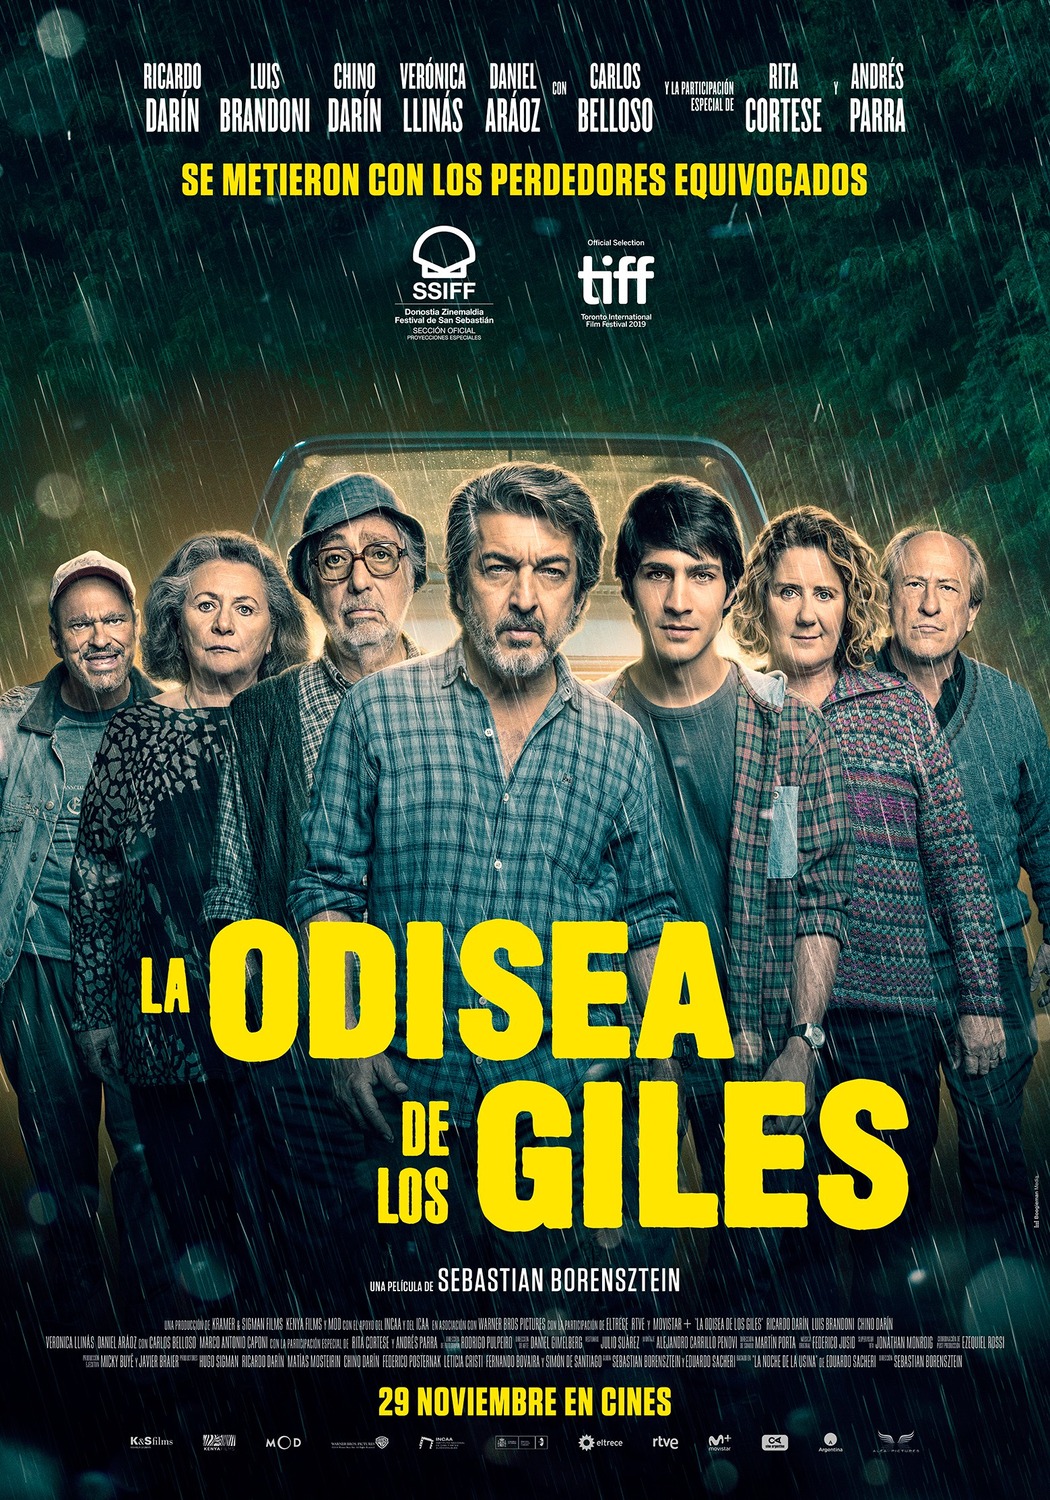 Extra Large Movie Poster Image for La odisea de los giles (#2 of 3)